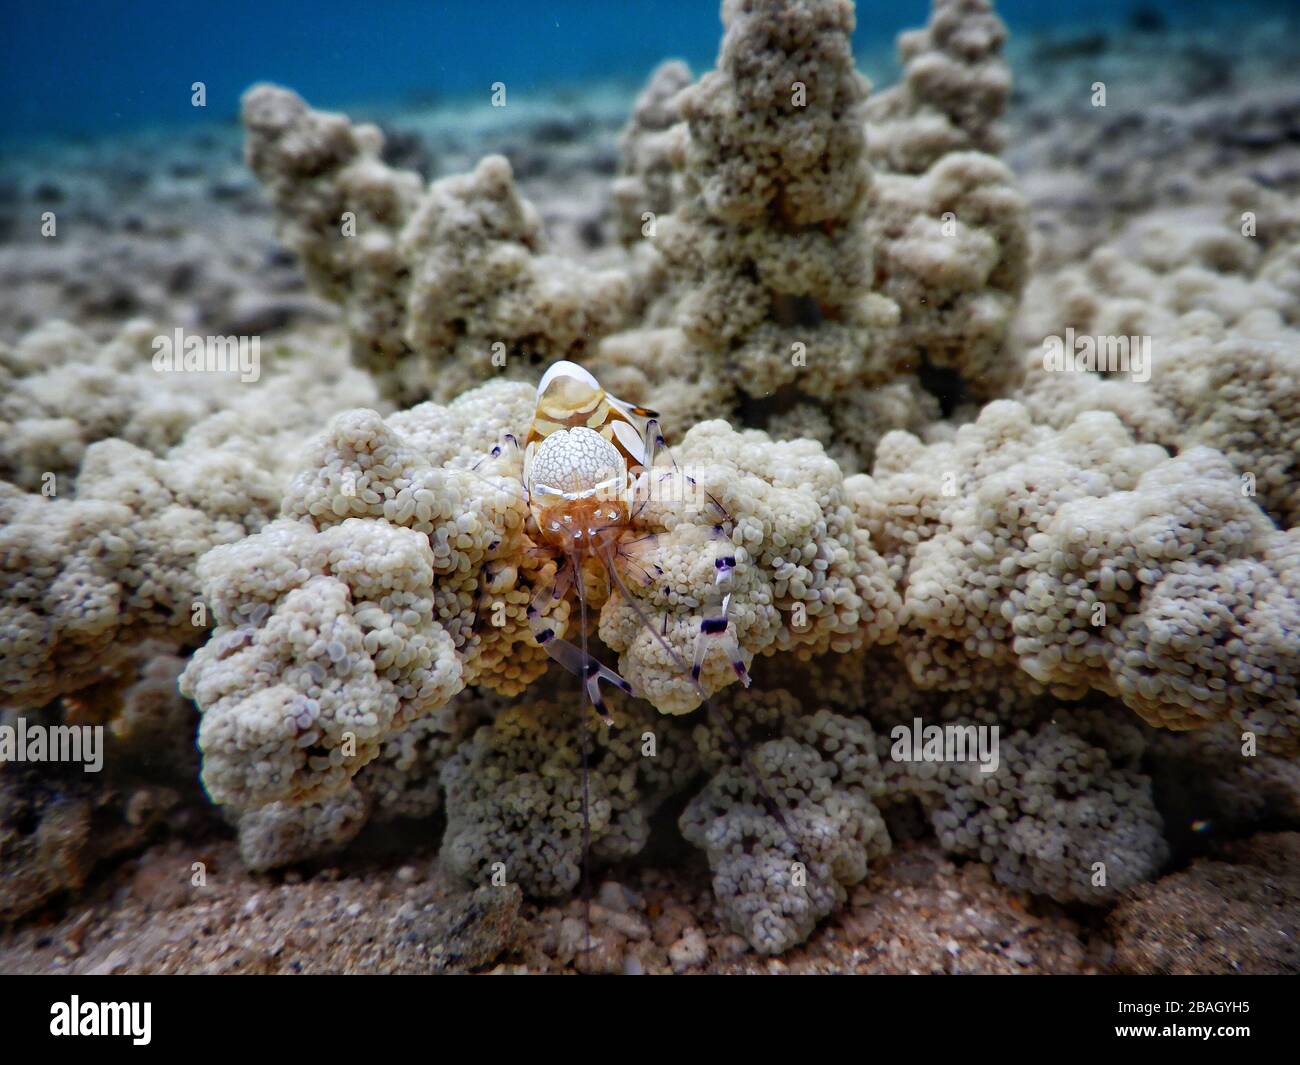 Reino de Tonga – Camarón anemona payaso del Pacífico en la isla de Vavaʻu Foto de stock